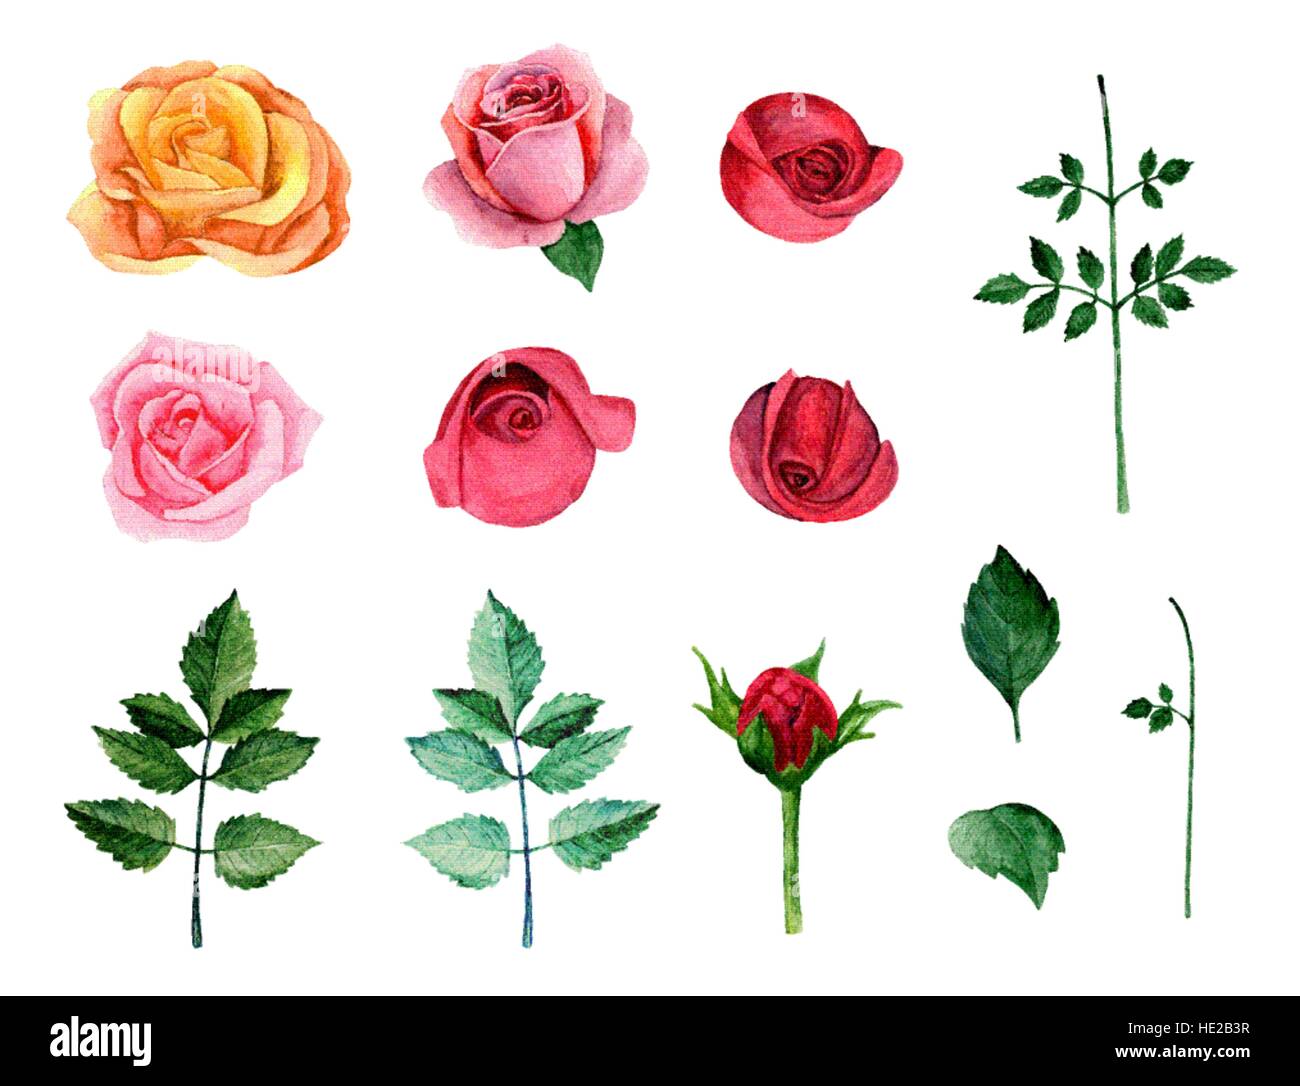 Aquarell rosa und rote Rosen Vektor clipart. Botanik clip art Stock Vektor